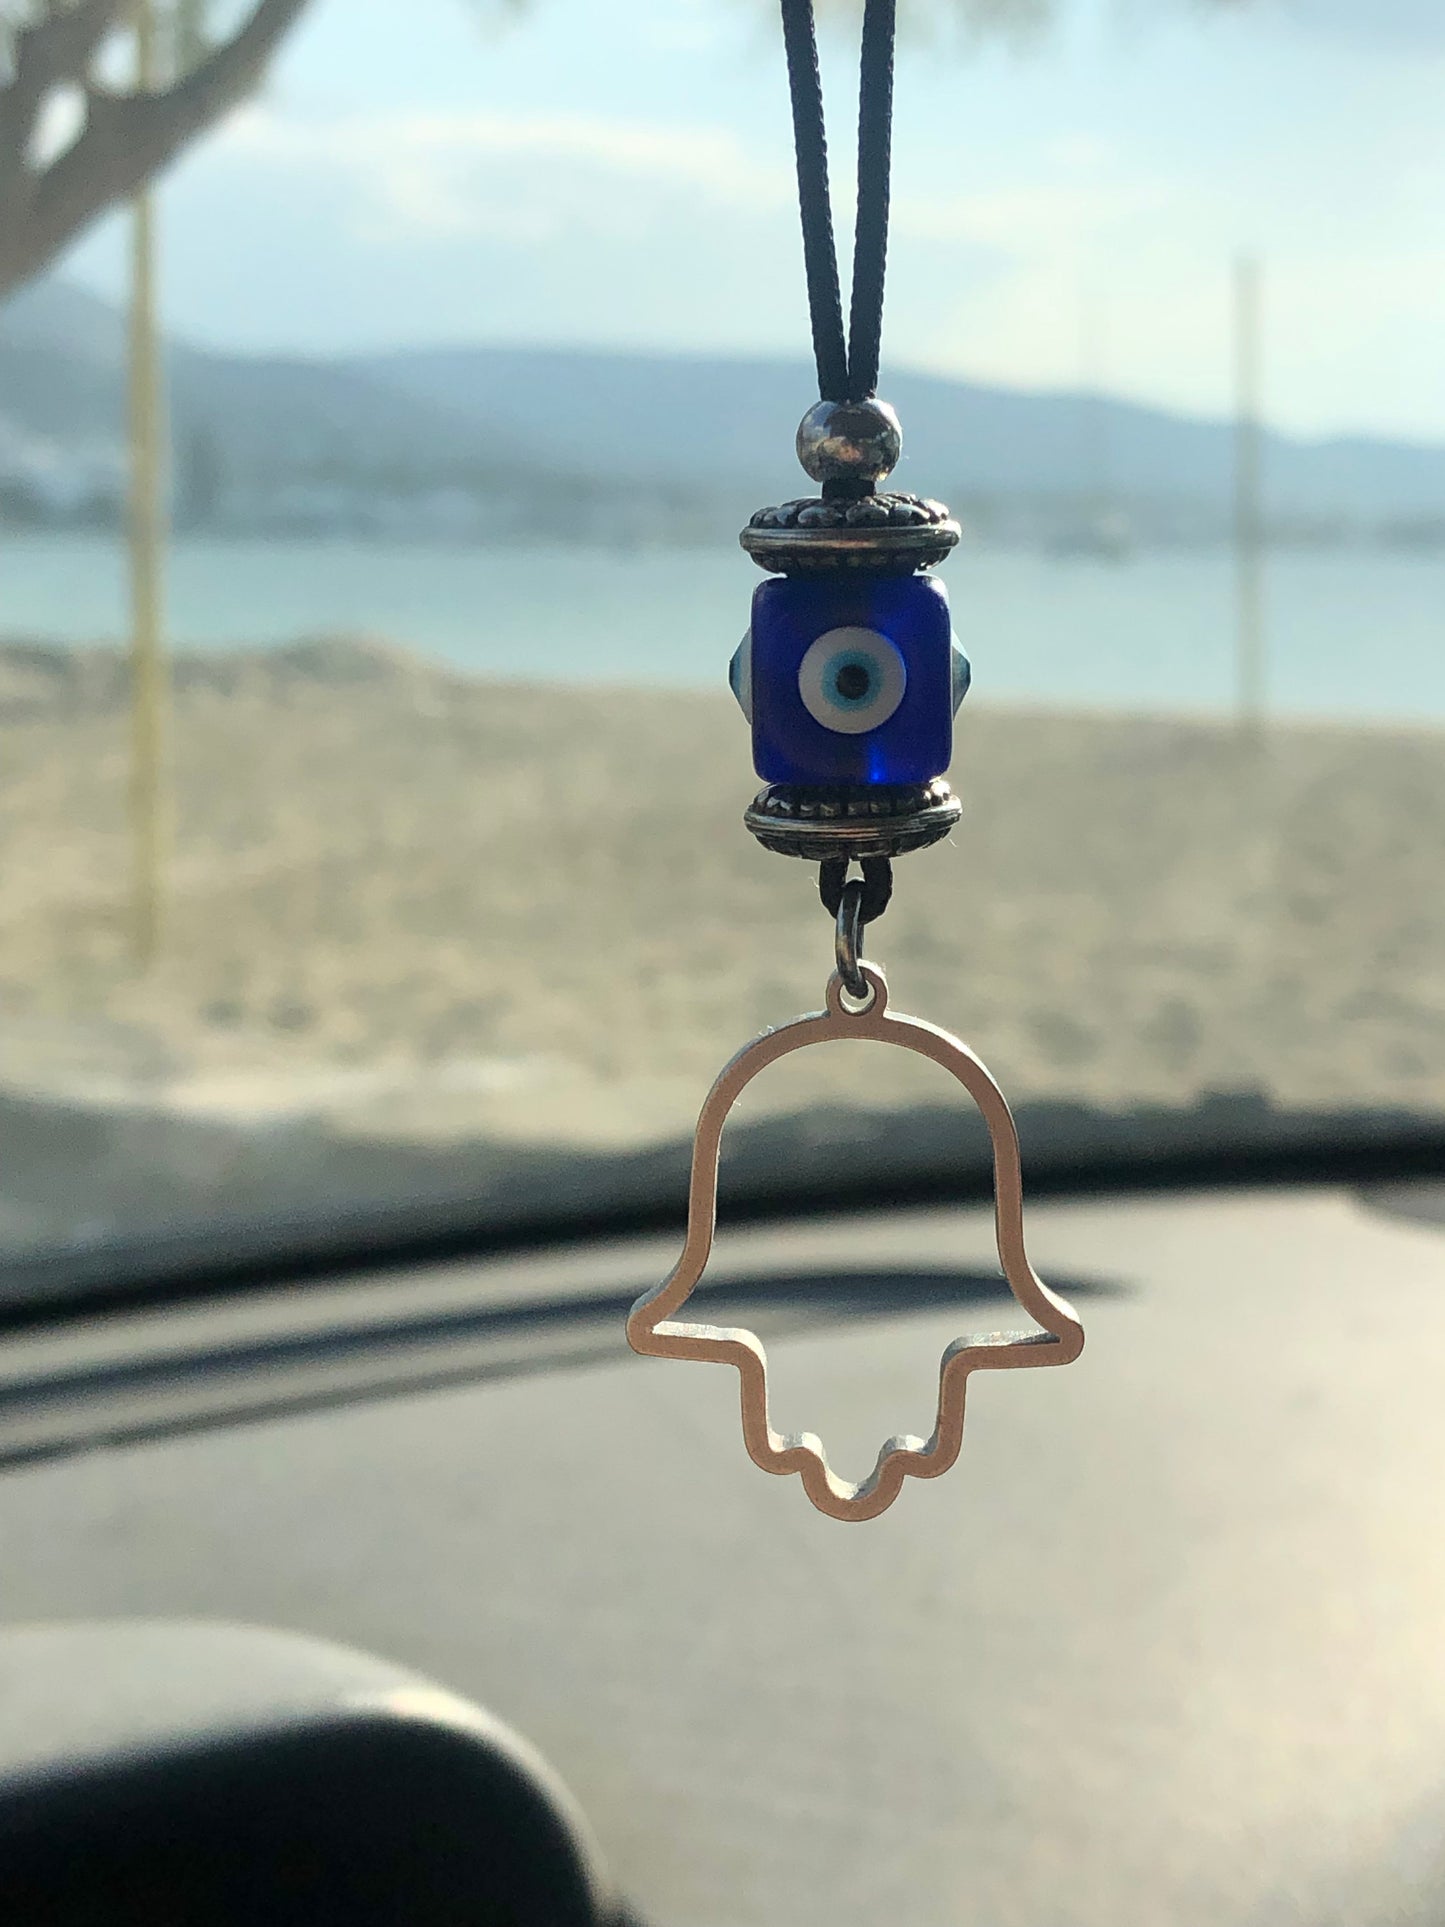 Hamsa evil eye hand car mirror charm - new driver gift - Car protection